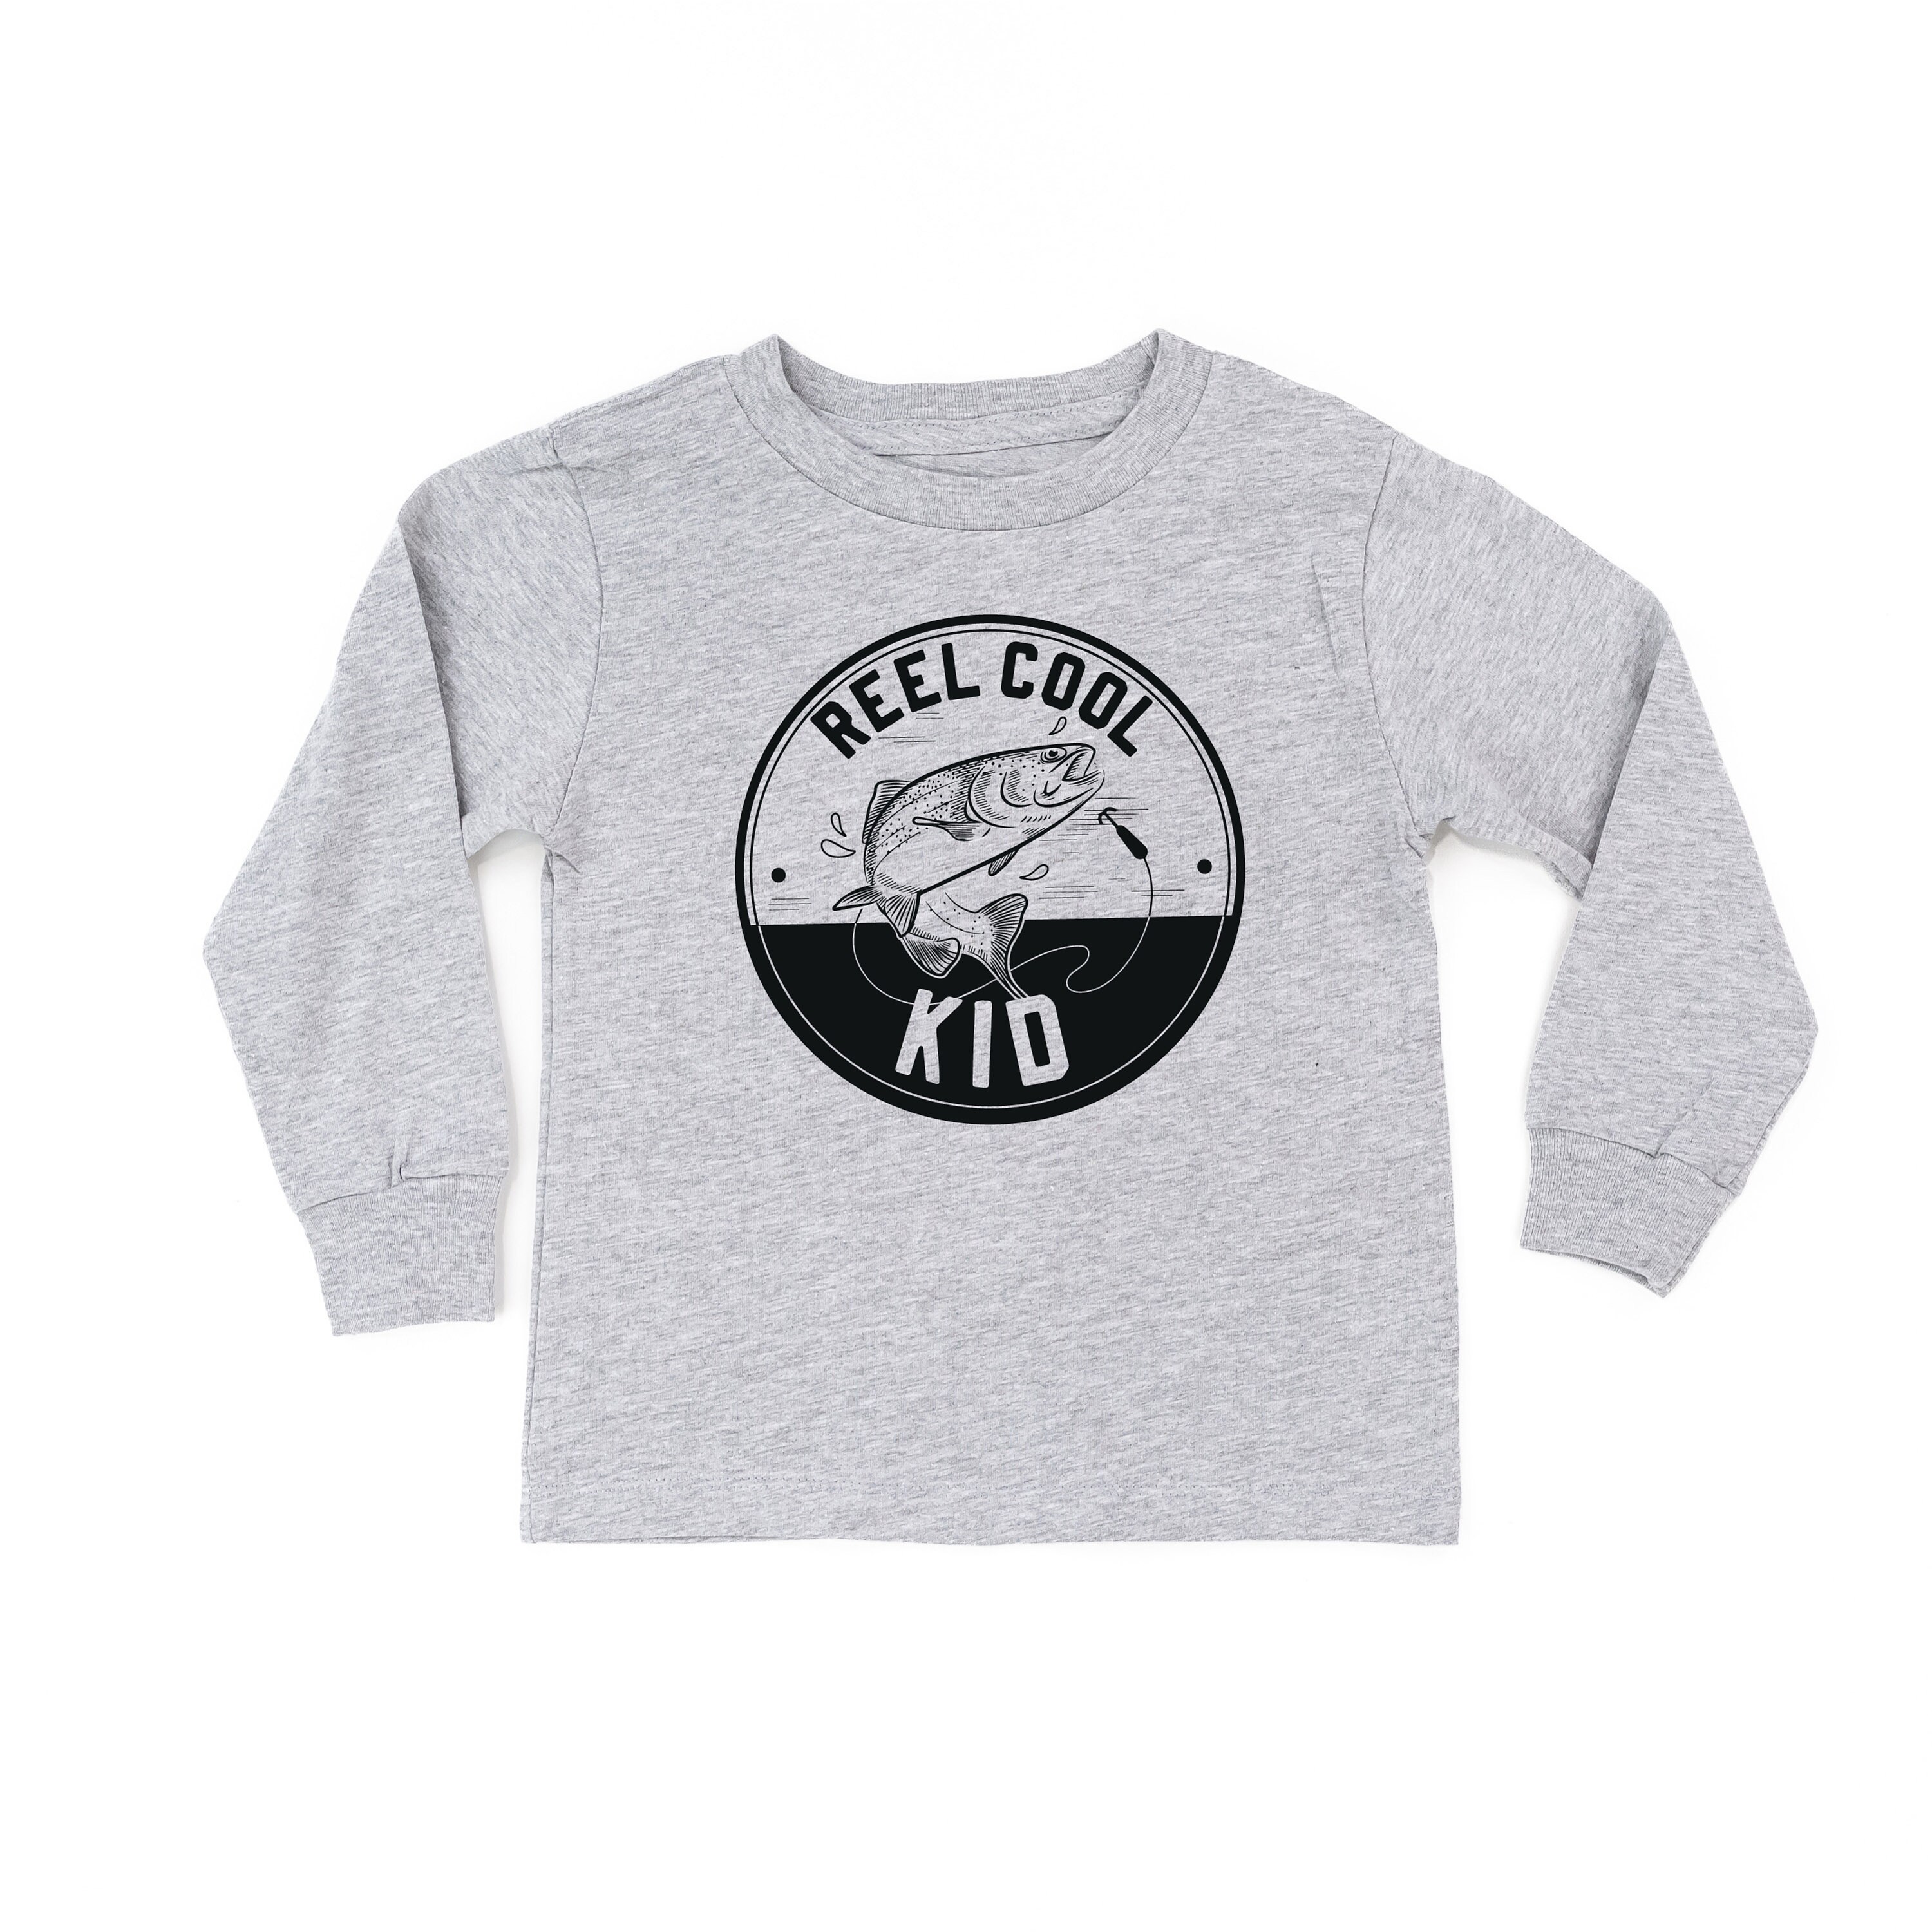 Reel Cool Kid - Long Sleeve Child Shirt | Kid Life | Kids Adventure Shirt | Fishing Graphic Tee | Kids Graphic Tee | Gift Idea for Kids